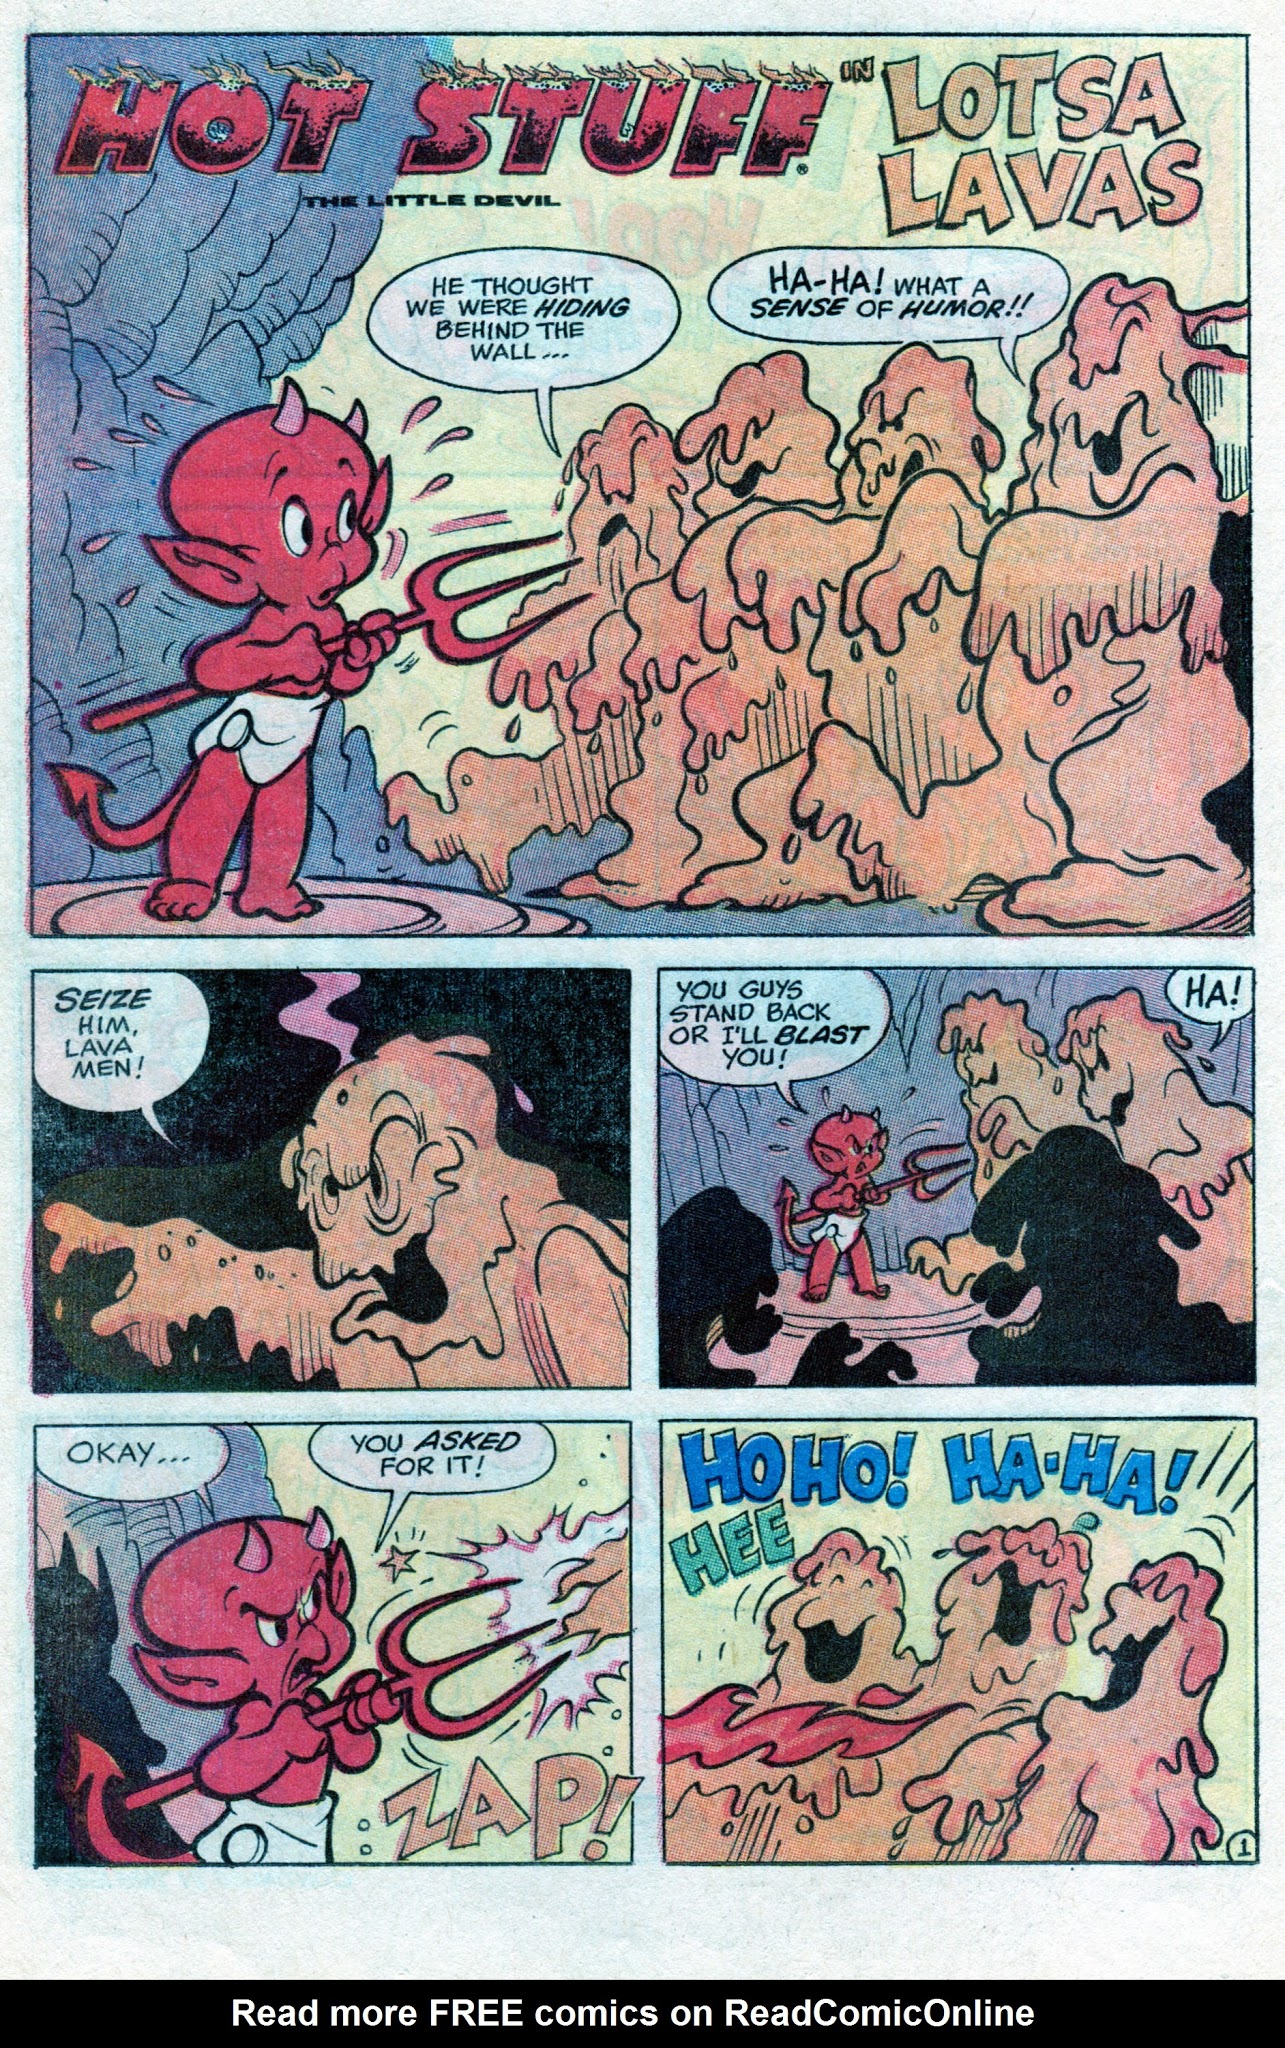 Read online Hot Stuff, the Little Devil comic -  Issue #109 - 24